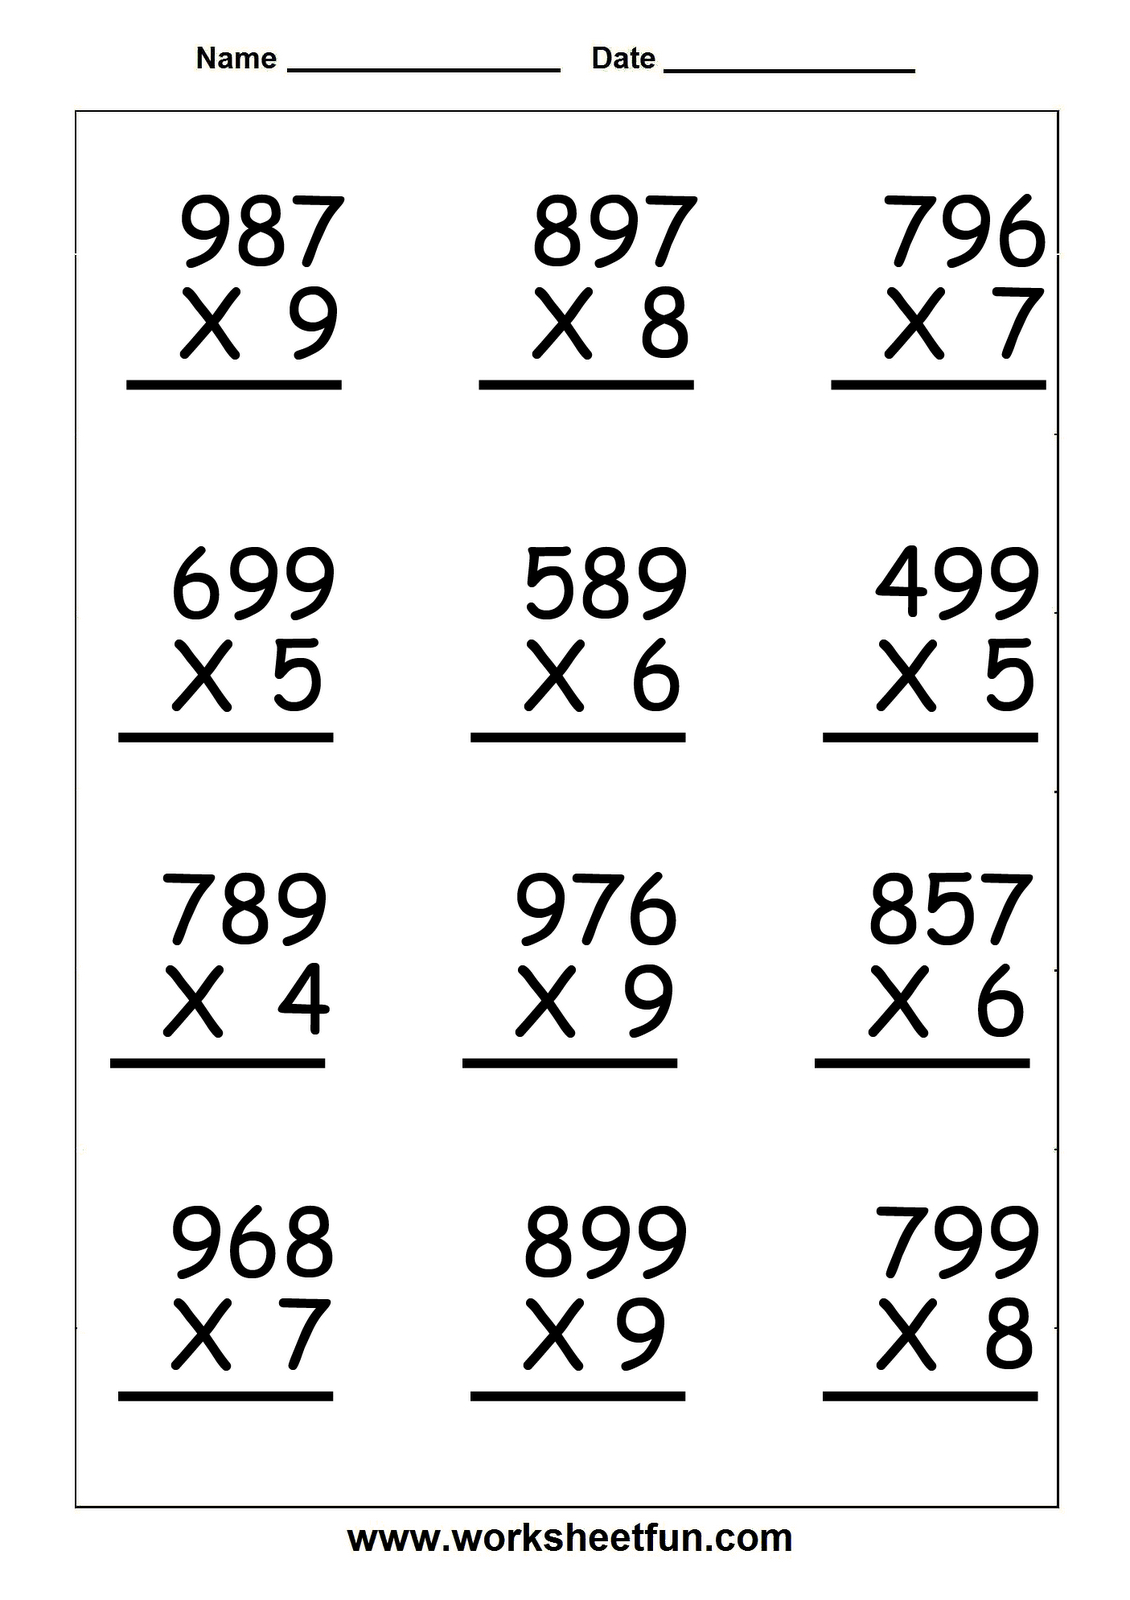 Multiplication Worksheets For 5Th Grade | Worksheetfun - Free | Free Printable Worksheets For 5Th Grade